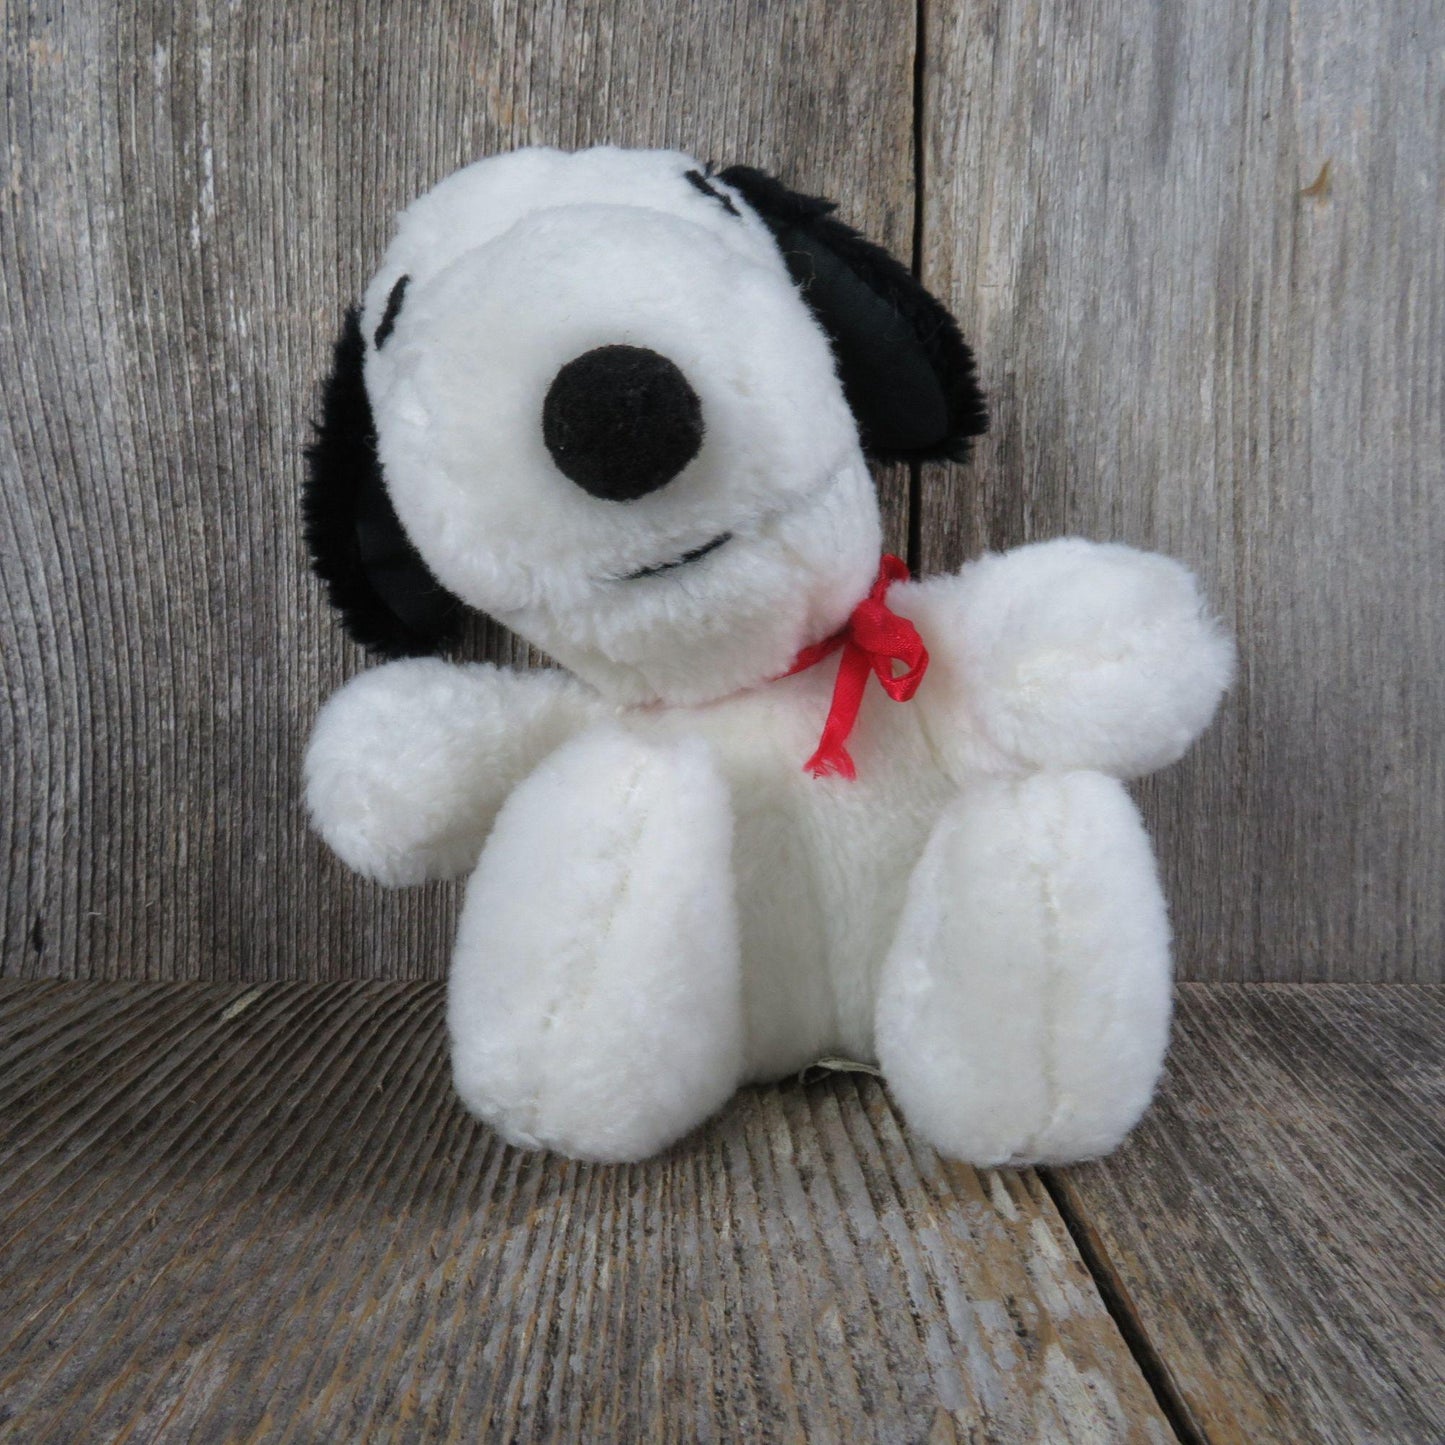 Vintage Snoopy Plush Small White Black Dog Charlie Brown Puppy Stuffed Animal Nut Filled 1968 Korea